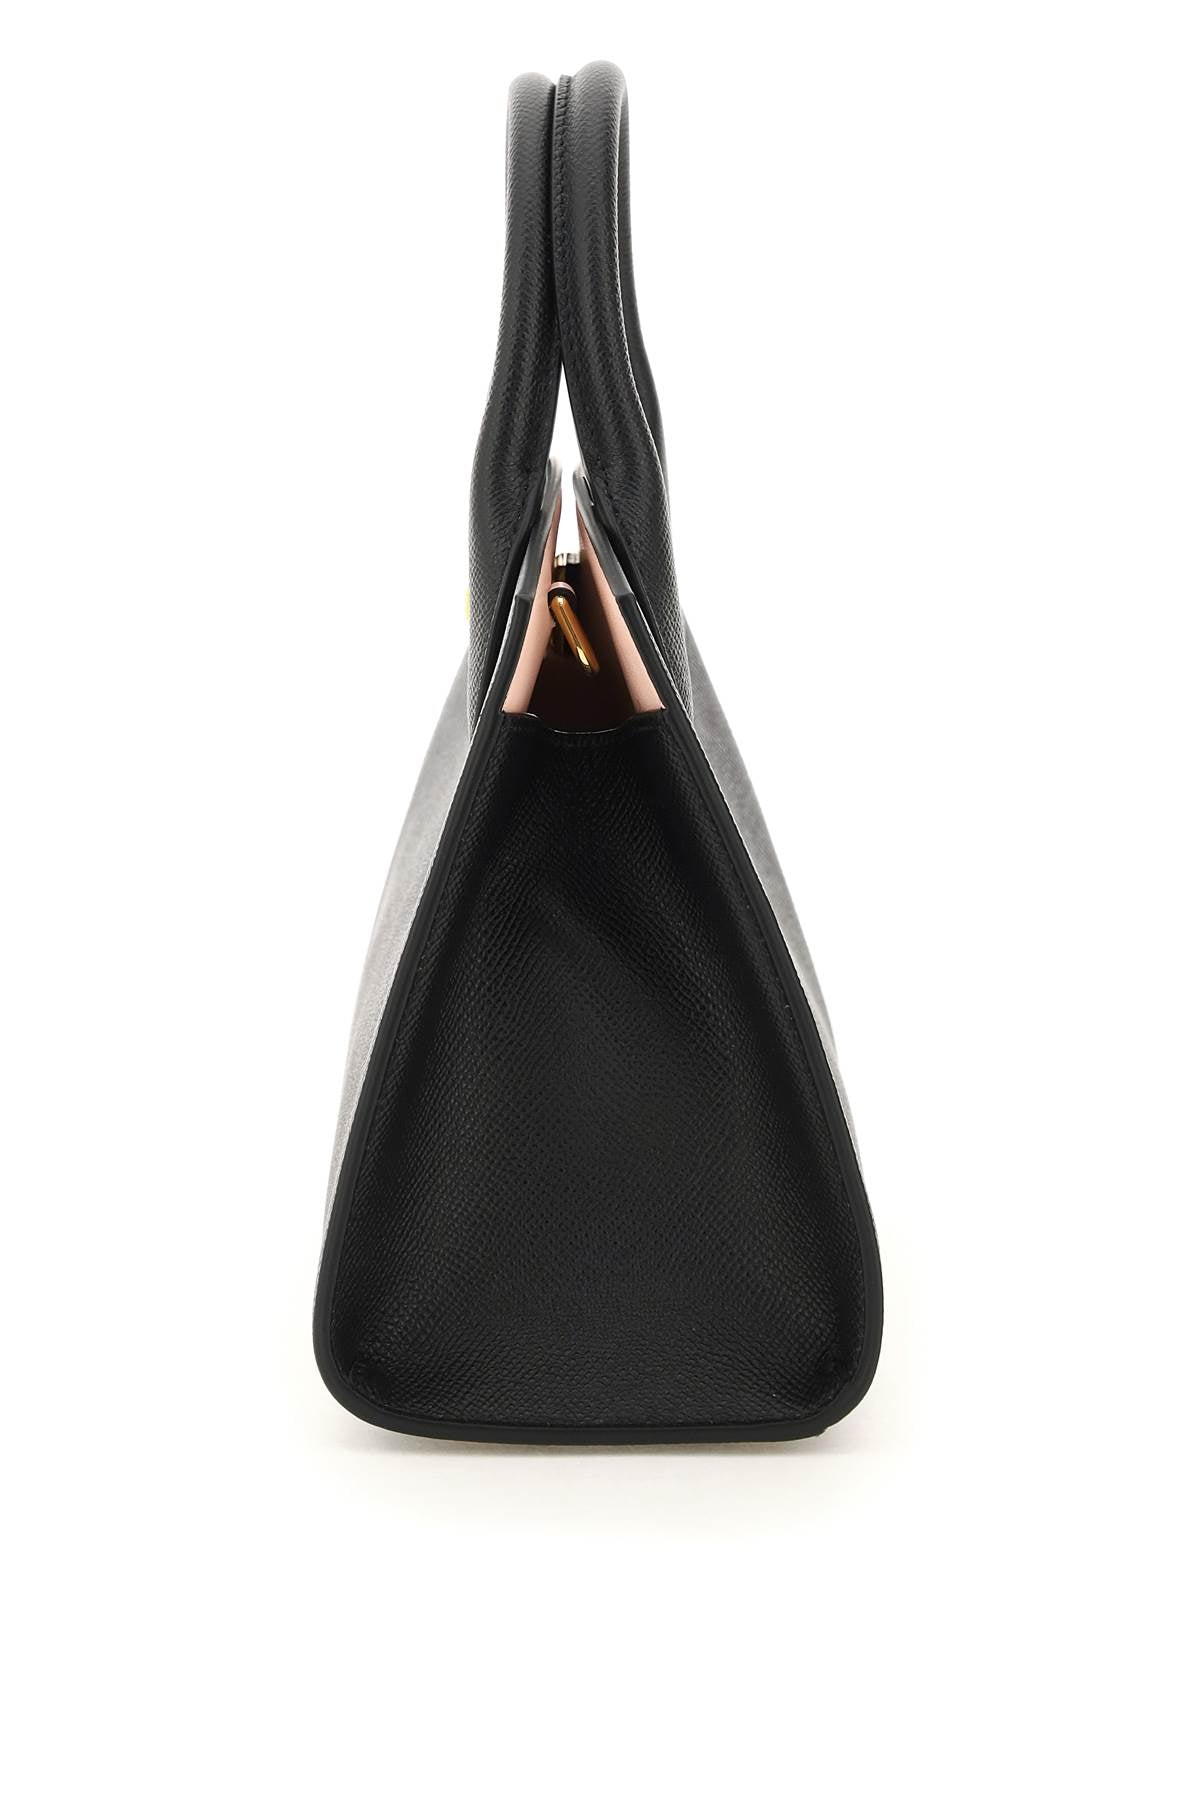 FERRAGAMO Sophisticated Black Leather Handbag for Women